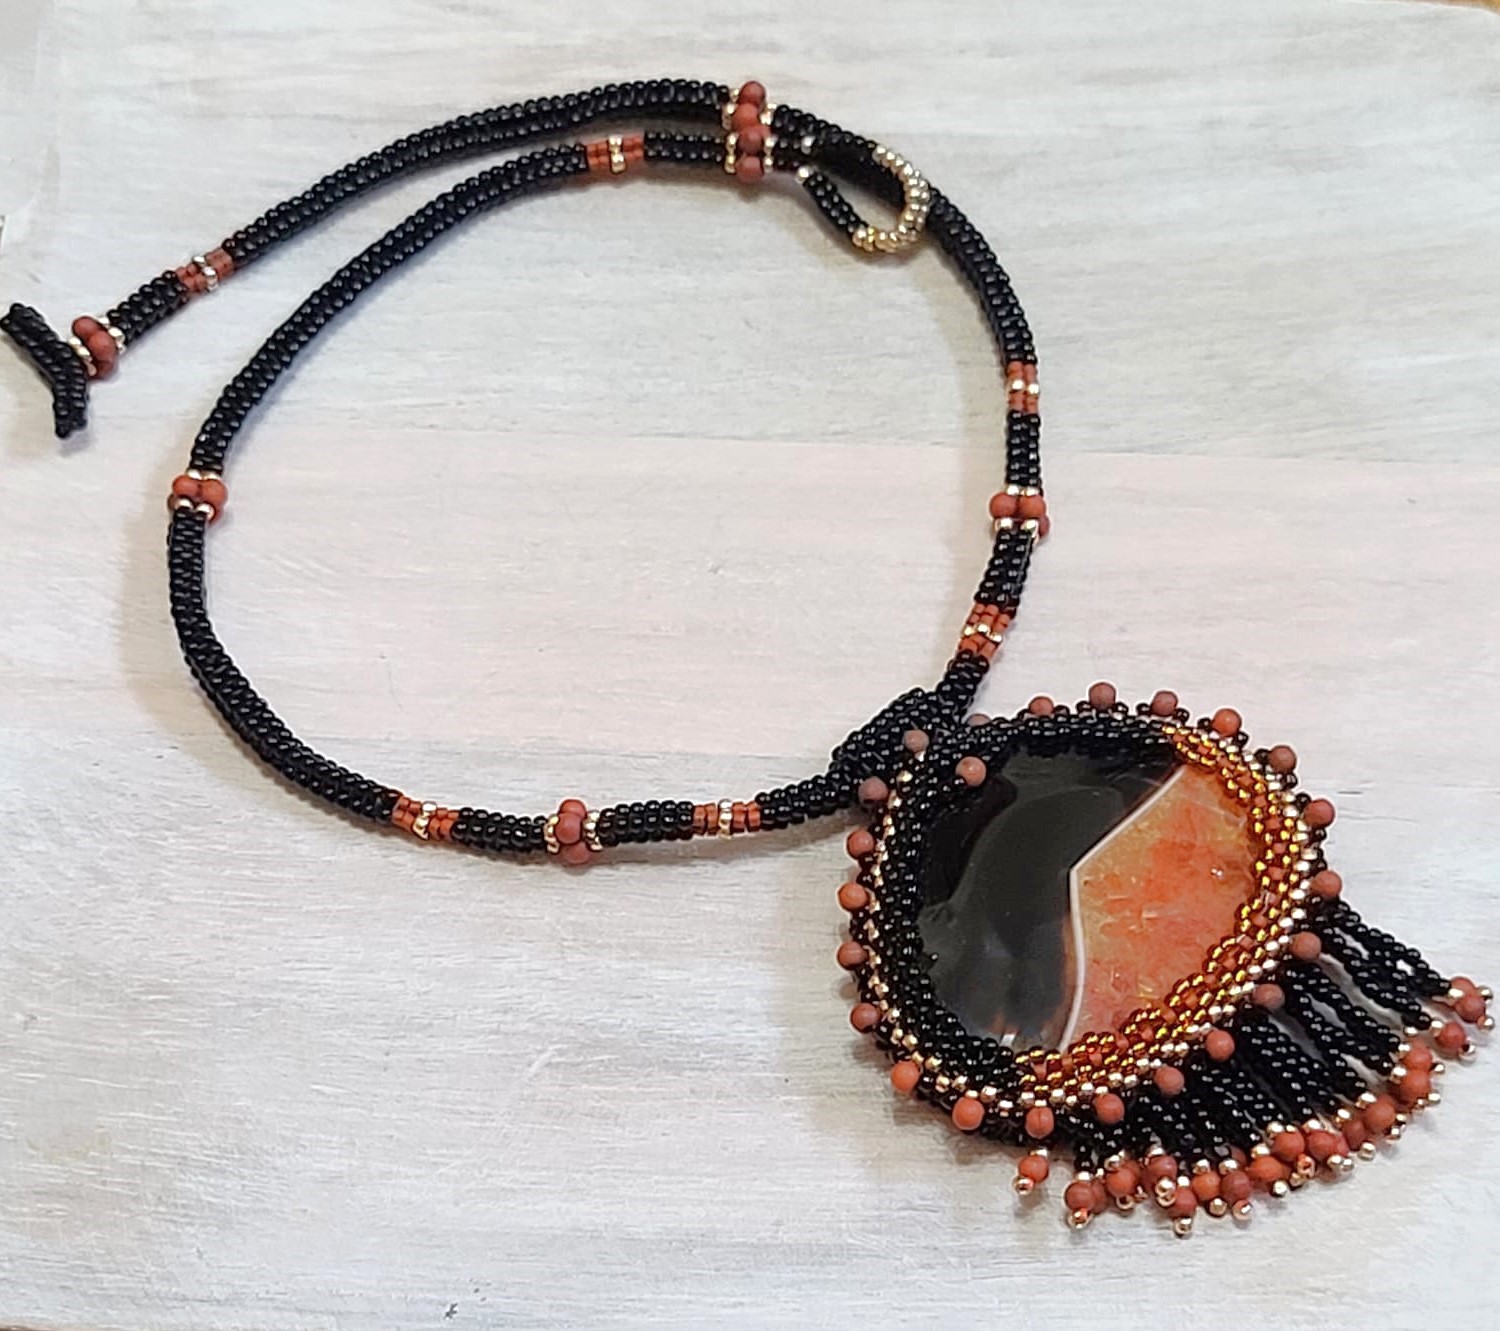 Agate gemstone necklace, pendant w/fringe, handcraftetd, glass